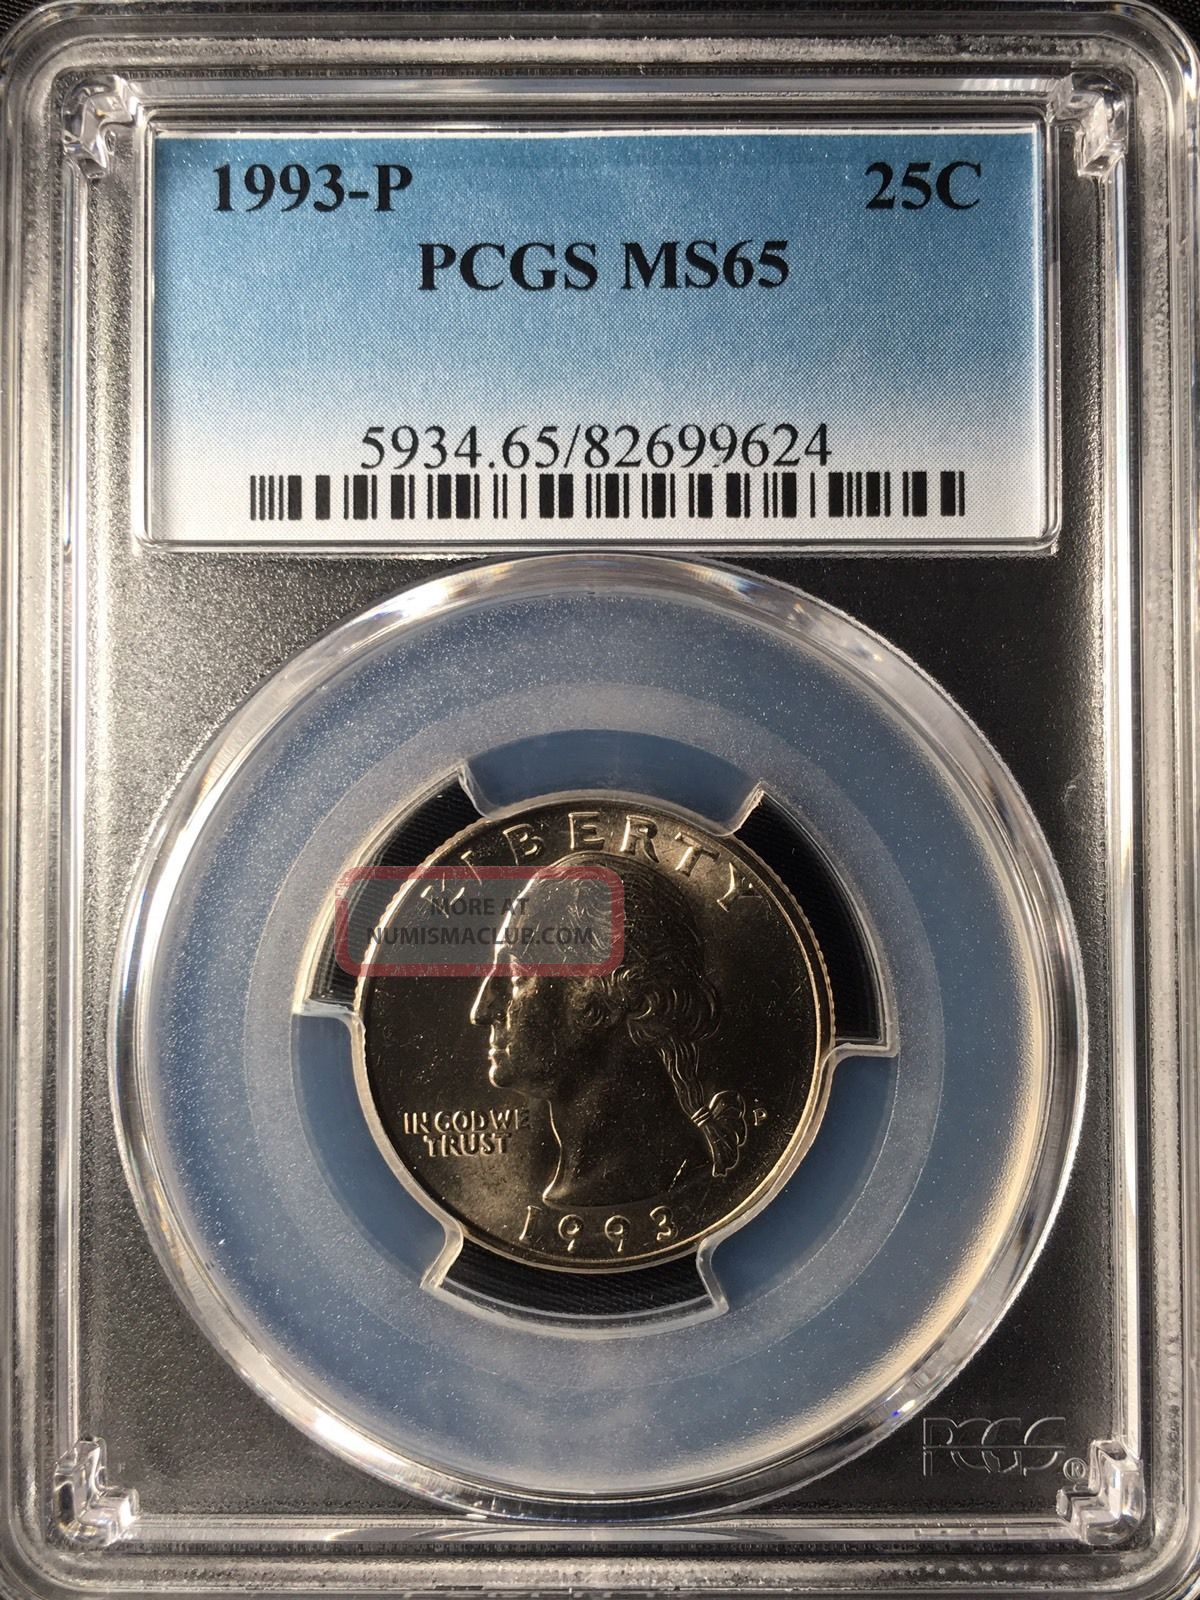 1993 - P 25c Washington Quarter Dollar Pcgs Ms65 82699624